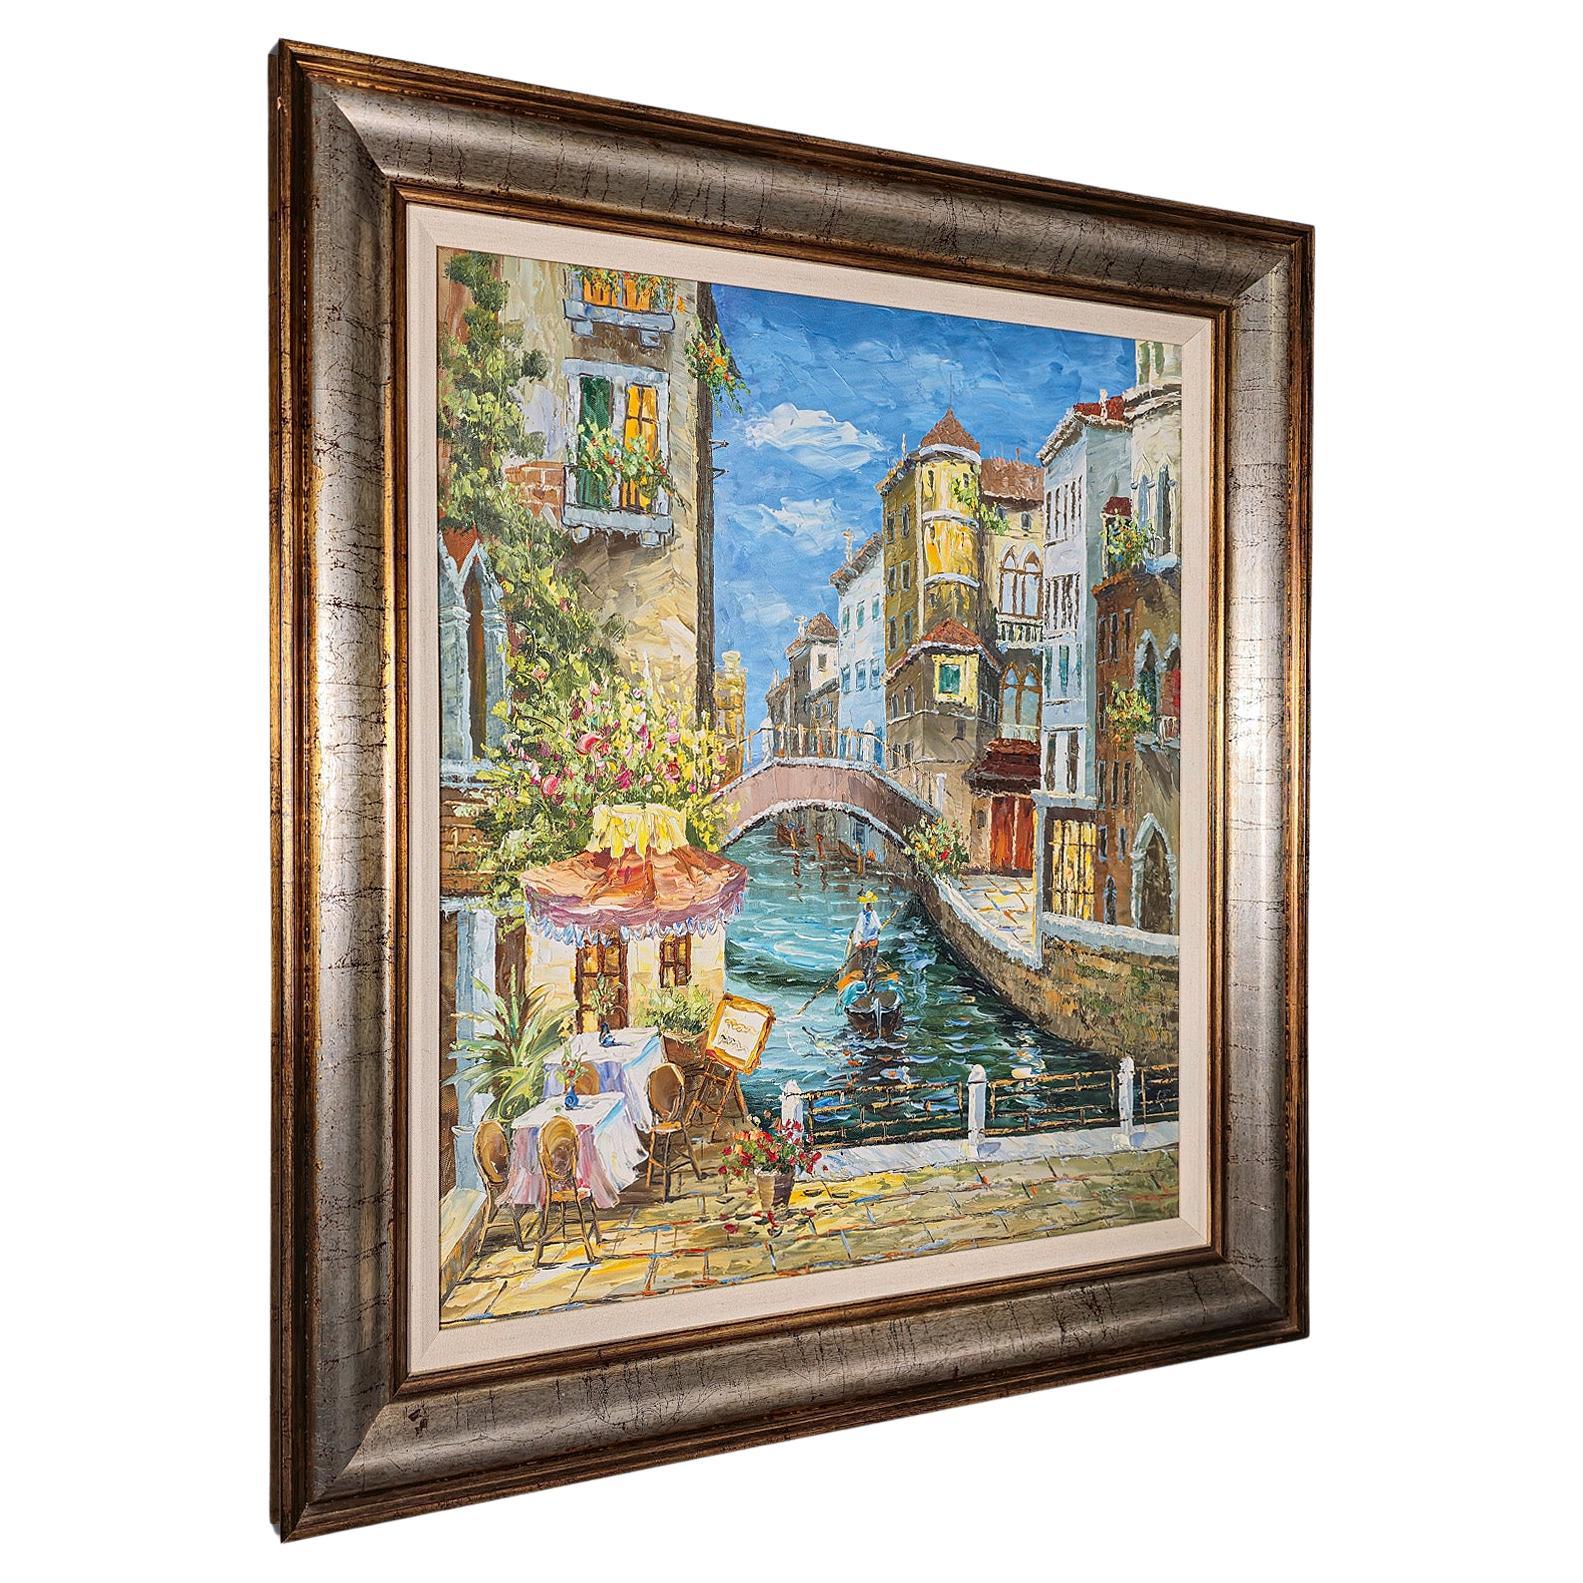 Vintage-Ölgemälde auf Leinwand, Venedig, Gemälde, venezianische Straßenszene, gerahmte Kunst